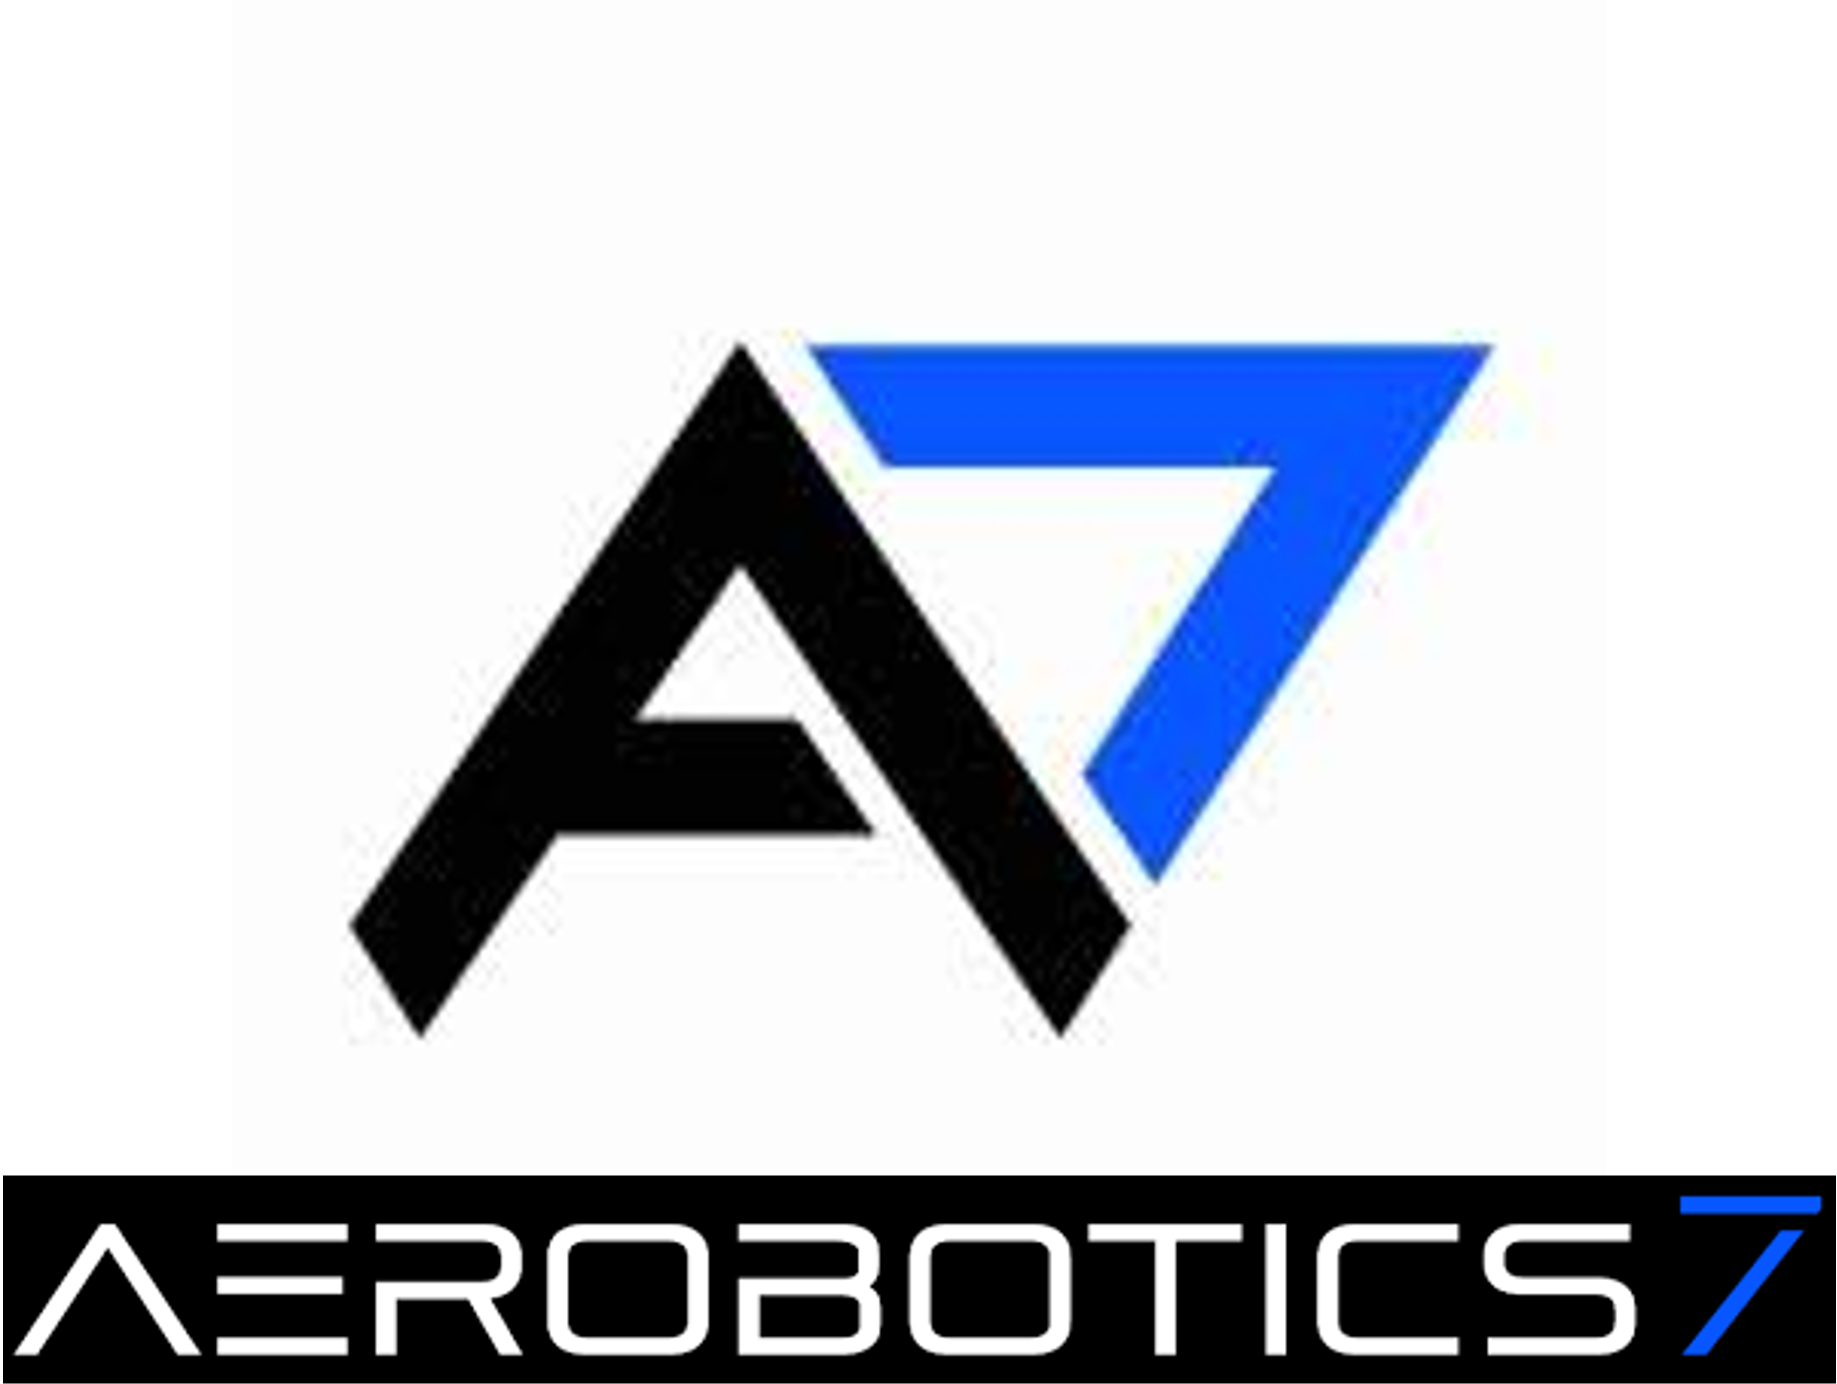 Aerobotics7